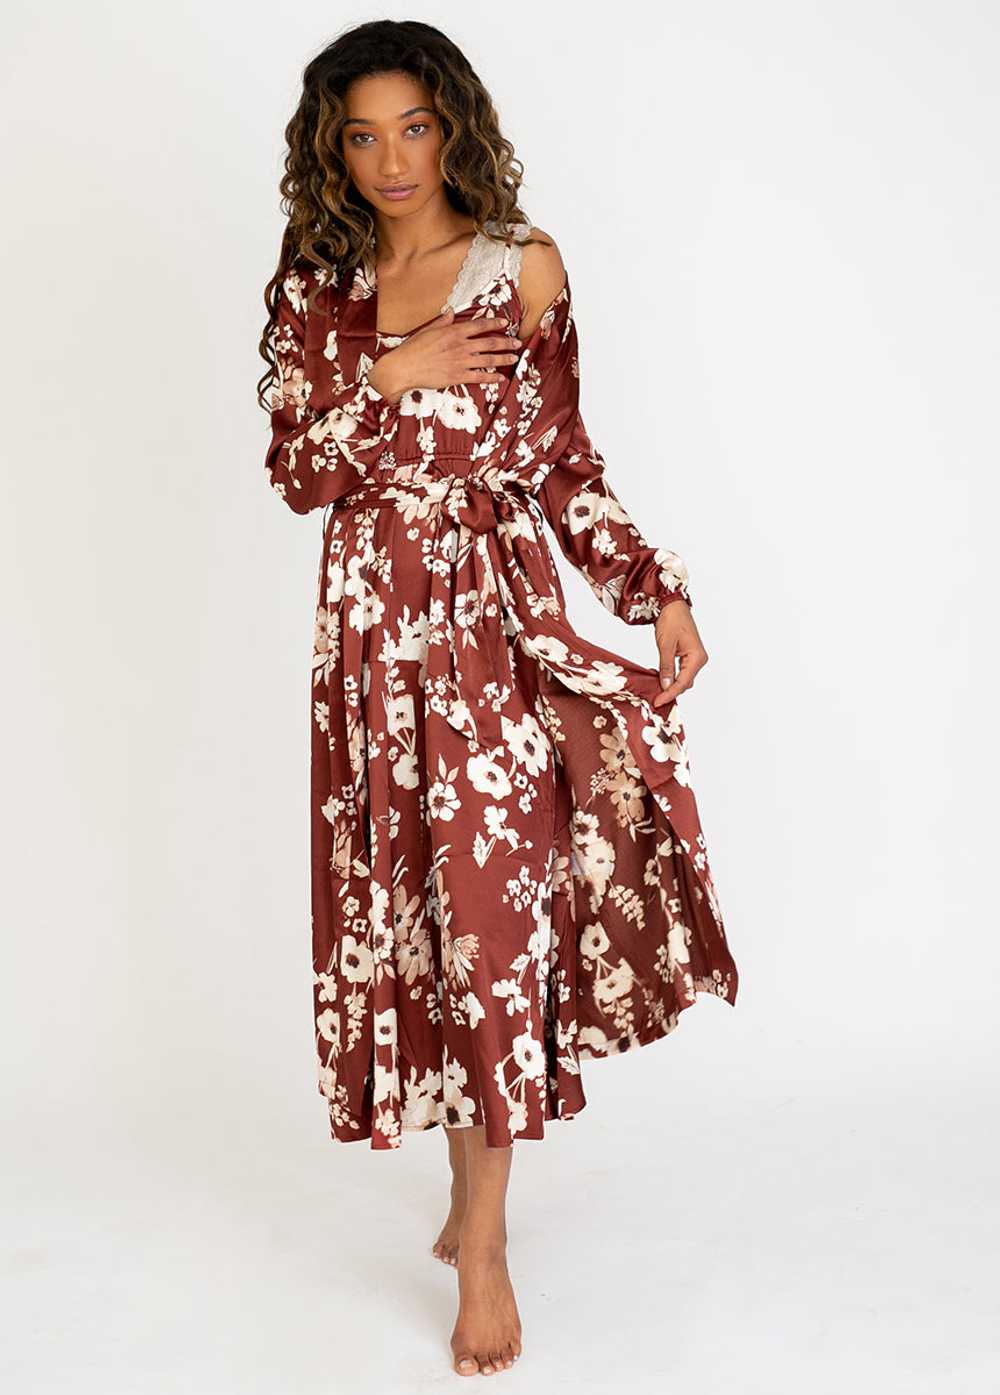 Joyfolie Pomona Robe in Rust Floral - image 3